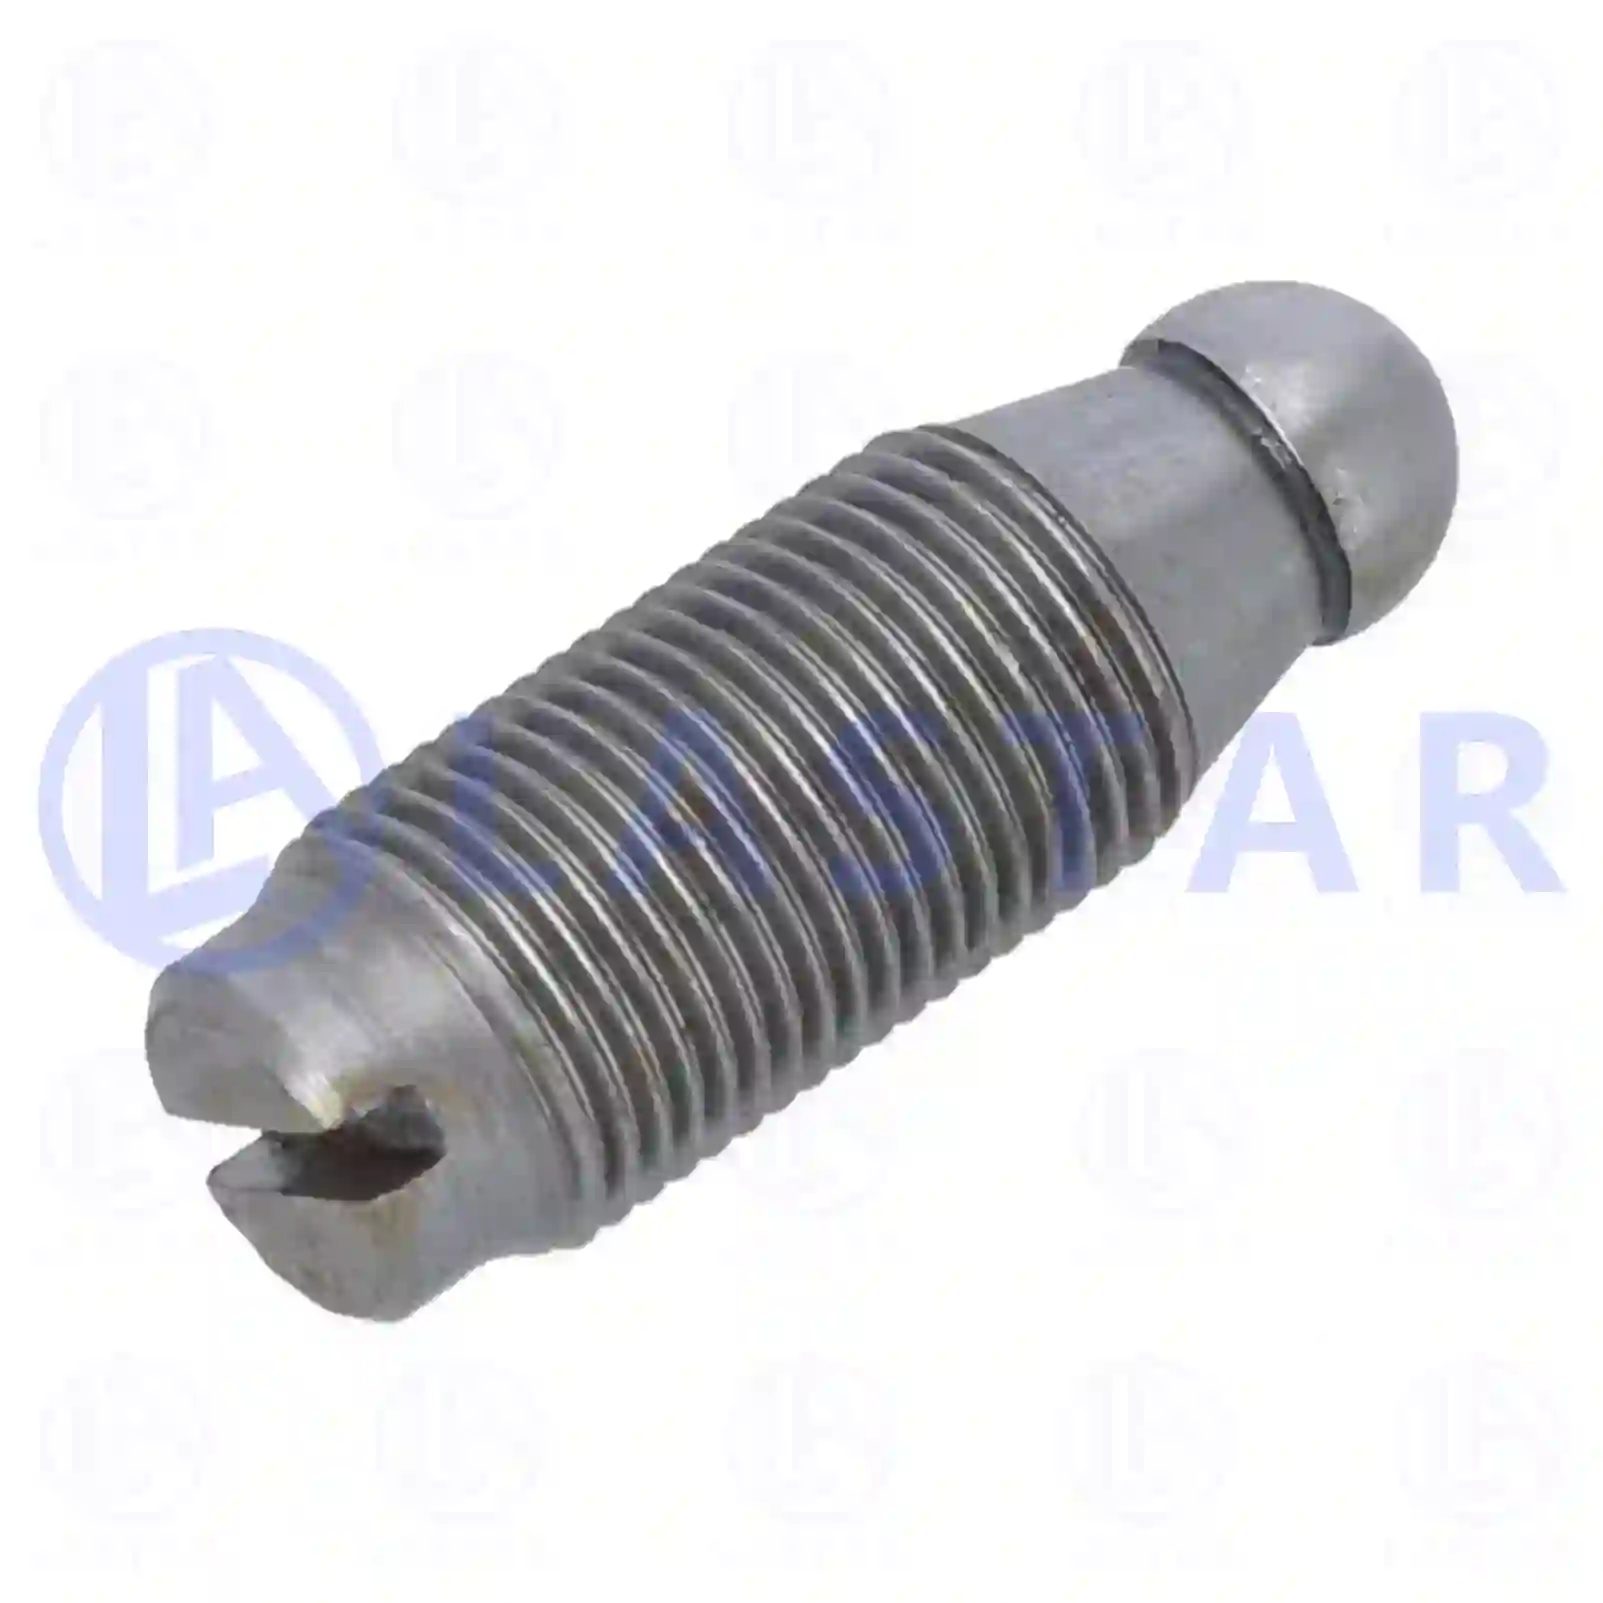  Cylinder Head Adjusting screw, rocker arm, la no: 77701566 ,  oem no:3120550321 Lastar Spare Part | Truck Spare Parts, Auotomotive Spare Parts